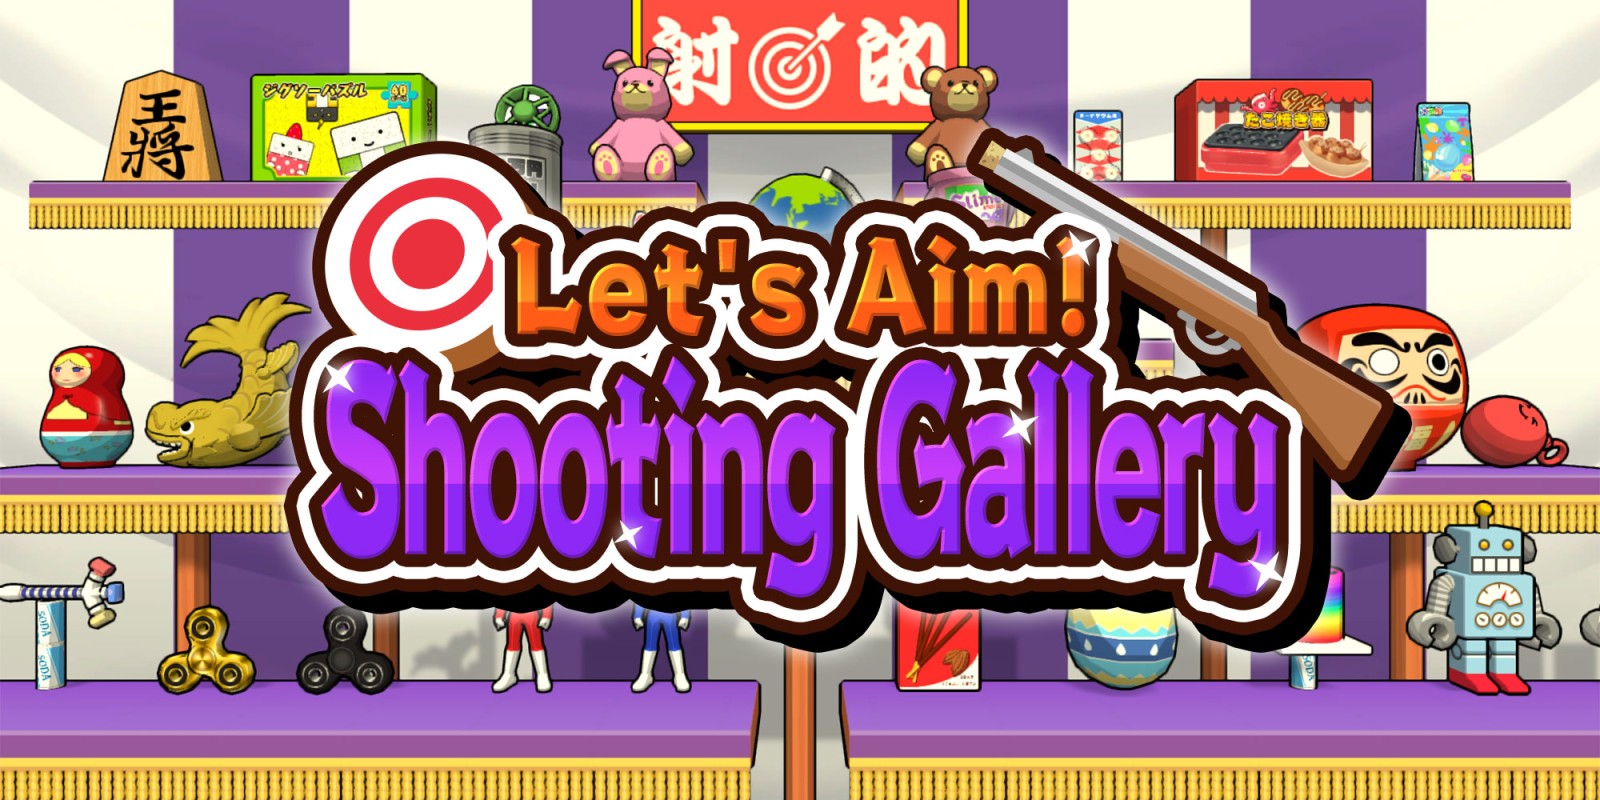 Let's Aim Shooting Gallery